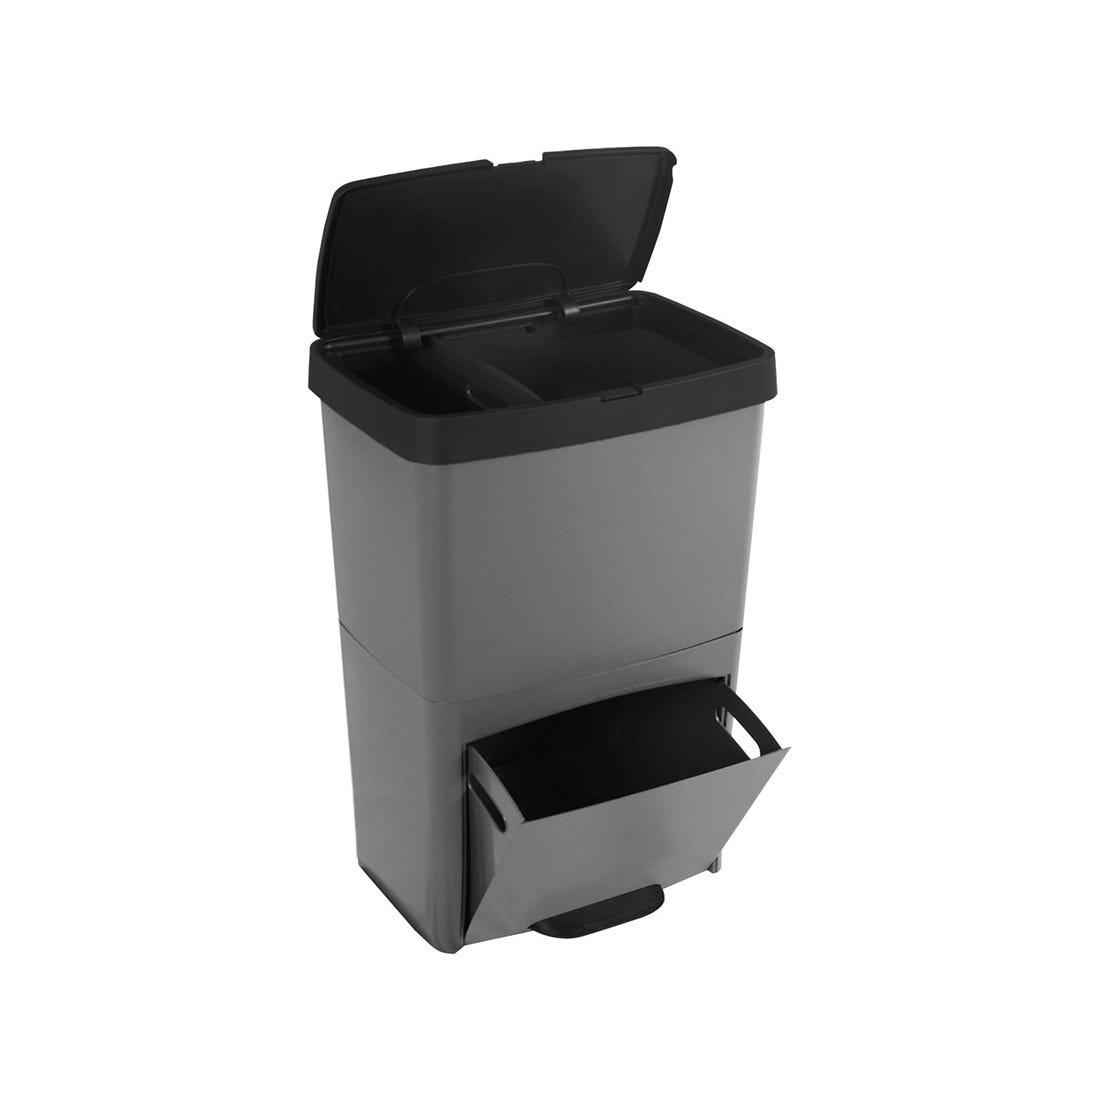 Cubo de reciclaje ecológico 34 litros de 2 compartimentos (1 de 18